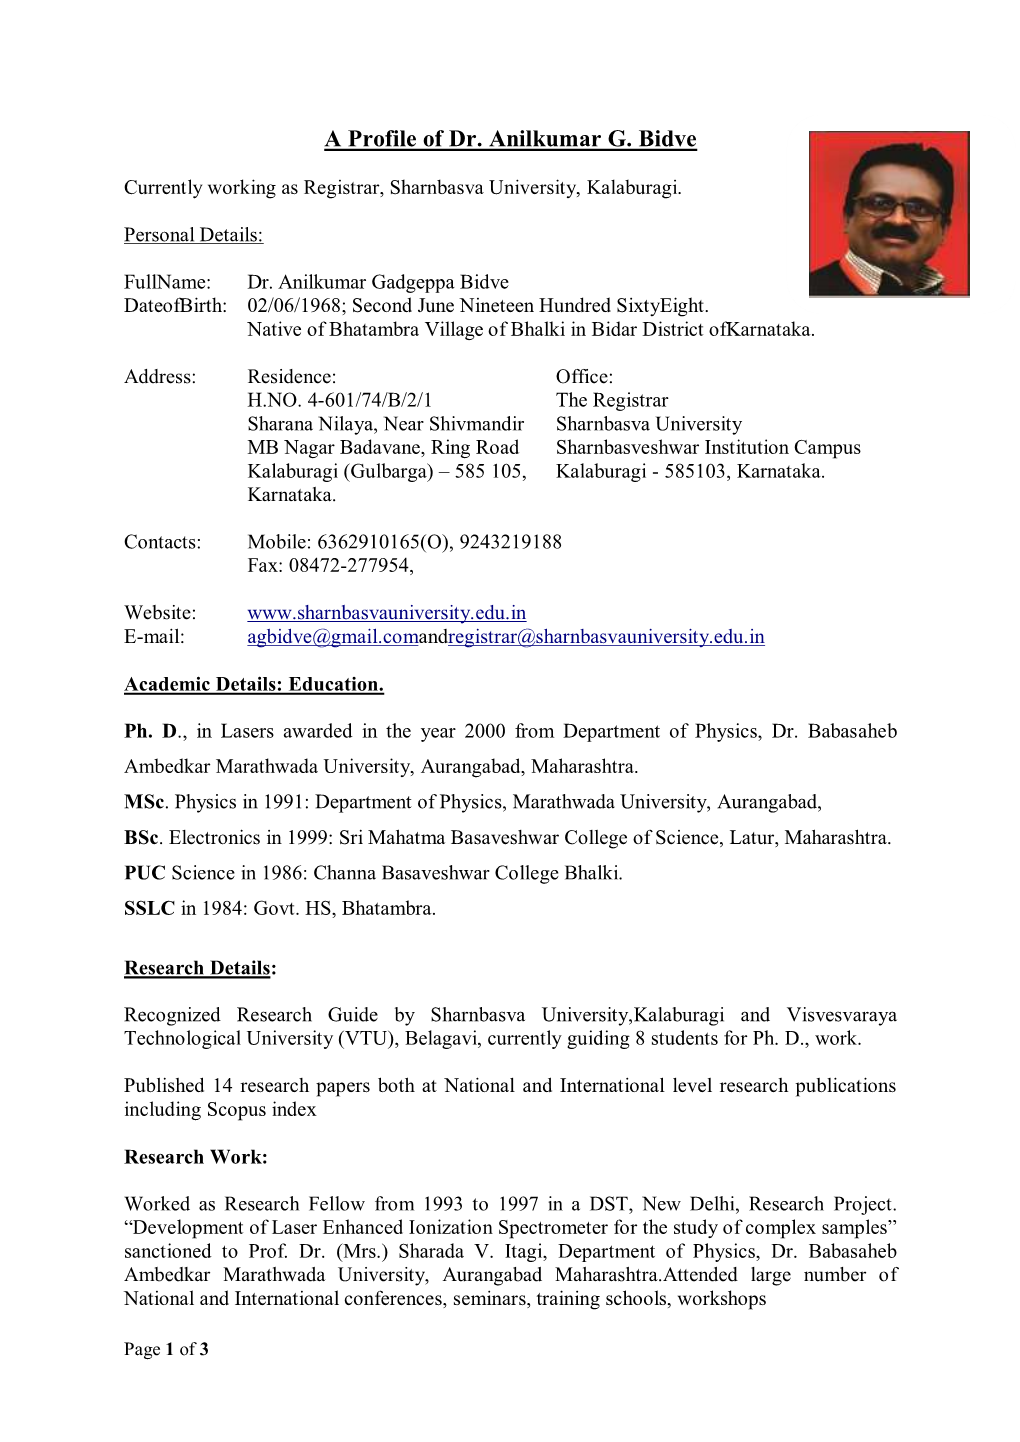 A Profile of Dr. Anilkumar G. Bidve